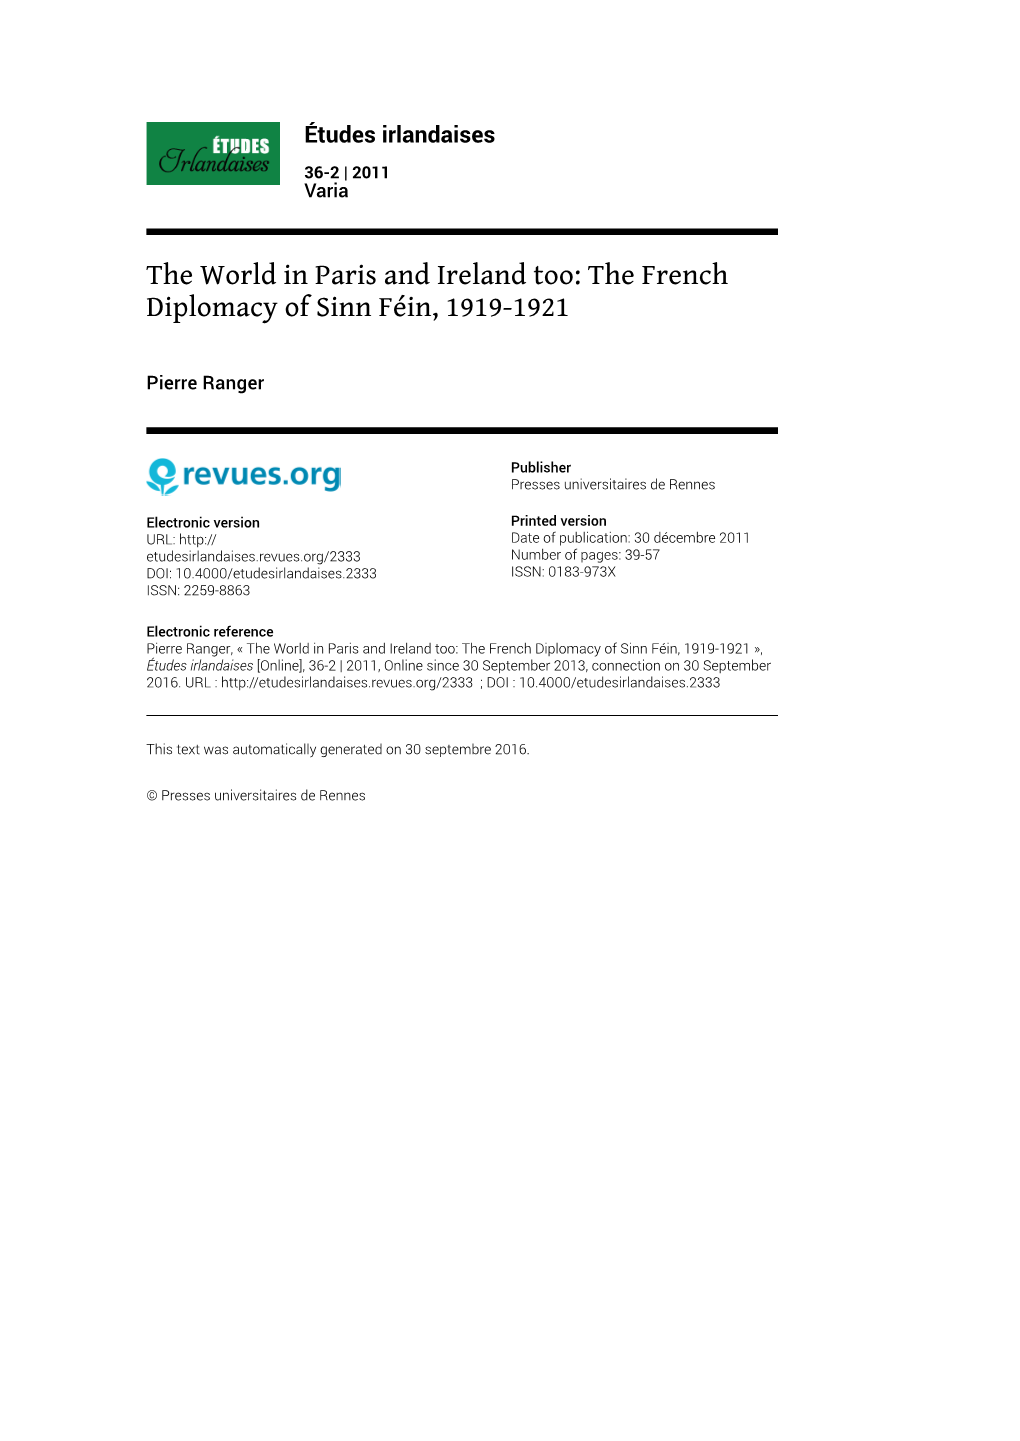 Études Irlandaises, 36-2 | 2012 the World in Paris and Ireland Too: the French Diplomacy of Sinn Féin, 1919-1921 2